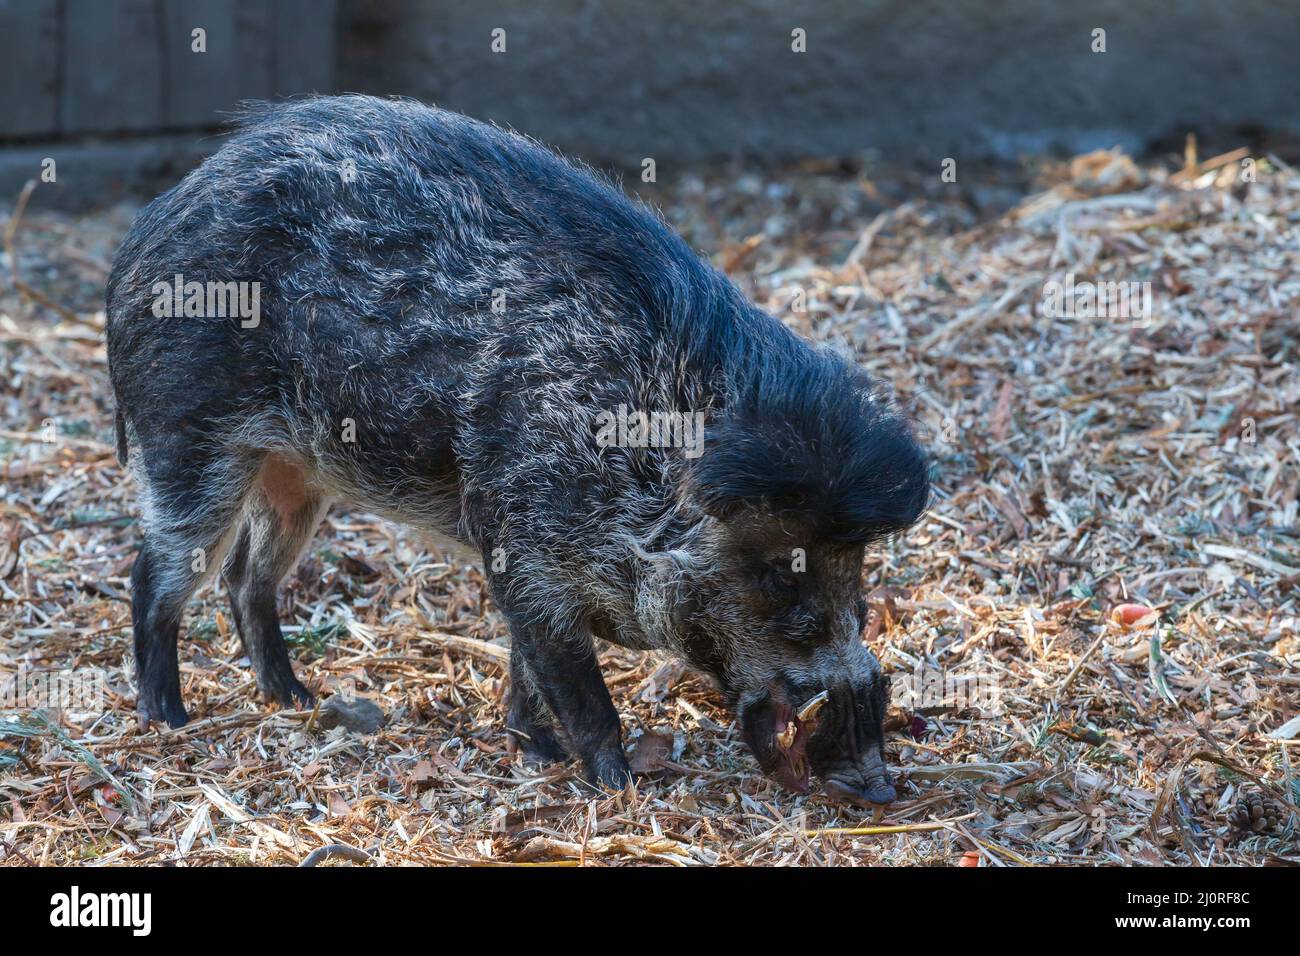 The black dwarf Pekari pig has tusks. Stock Photo